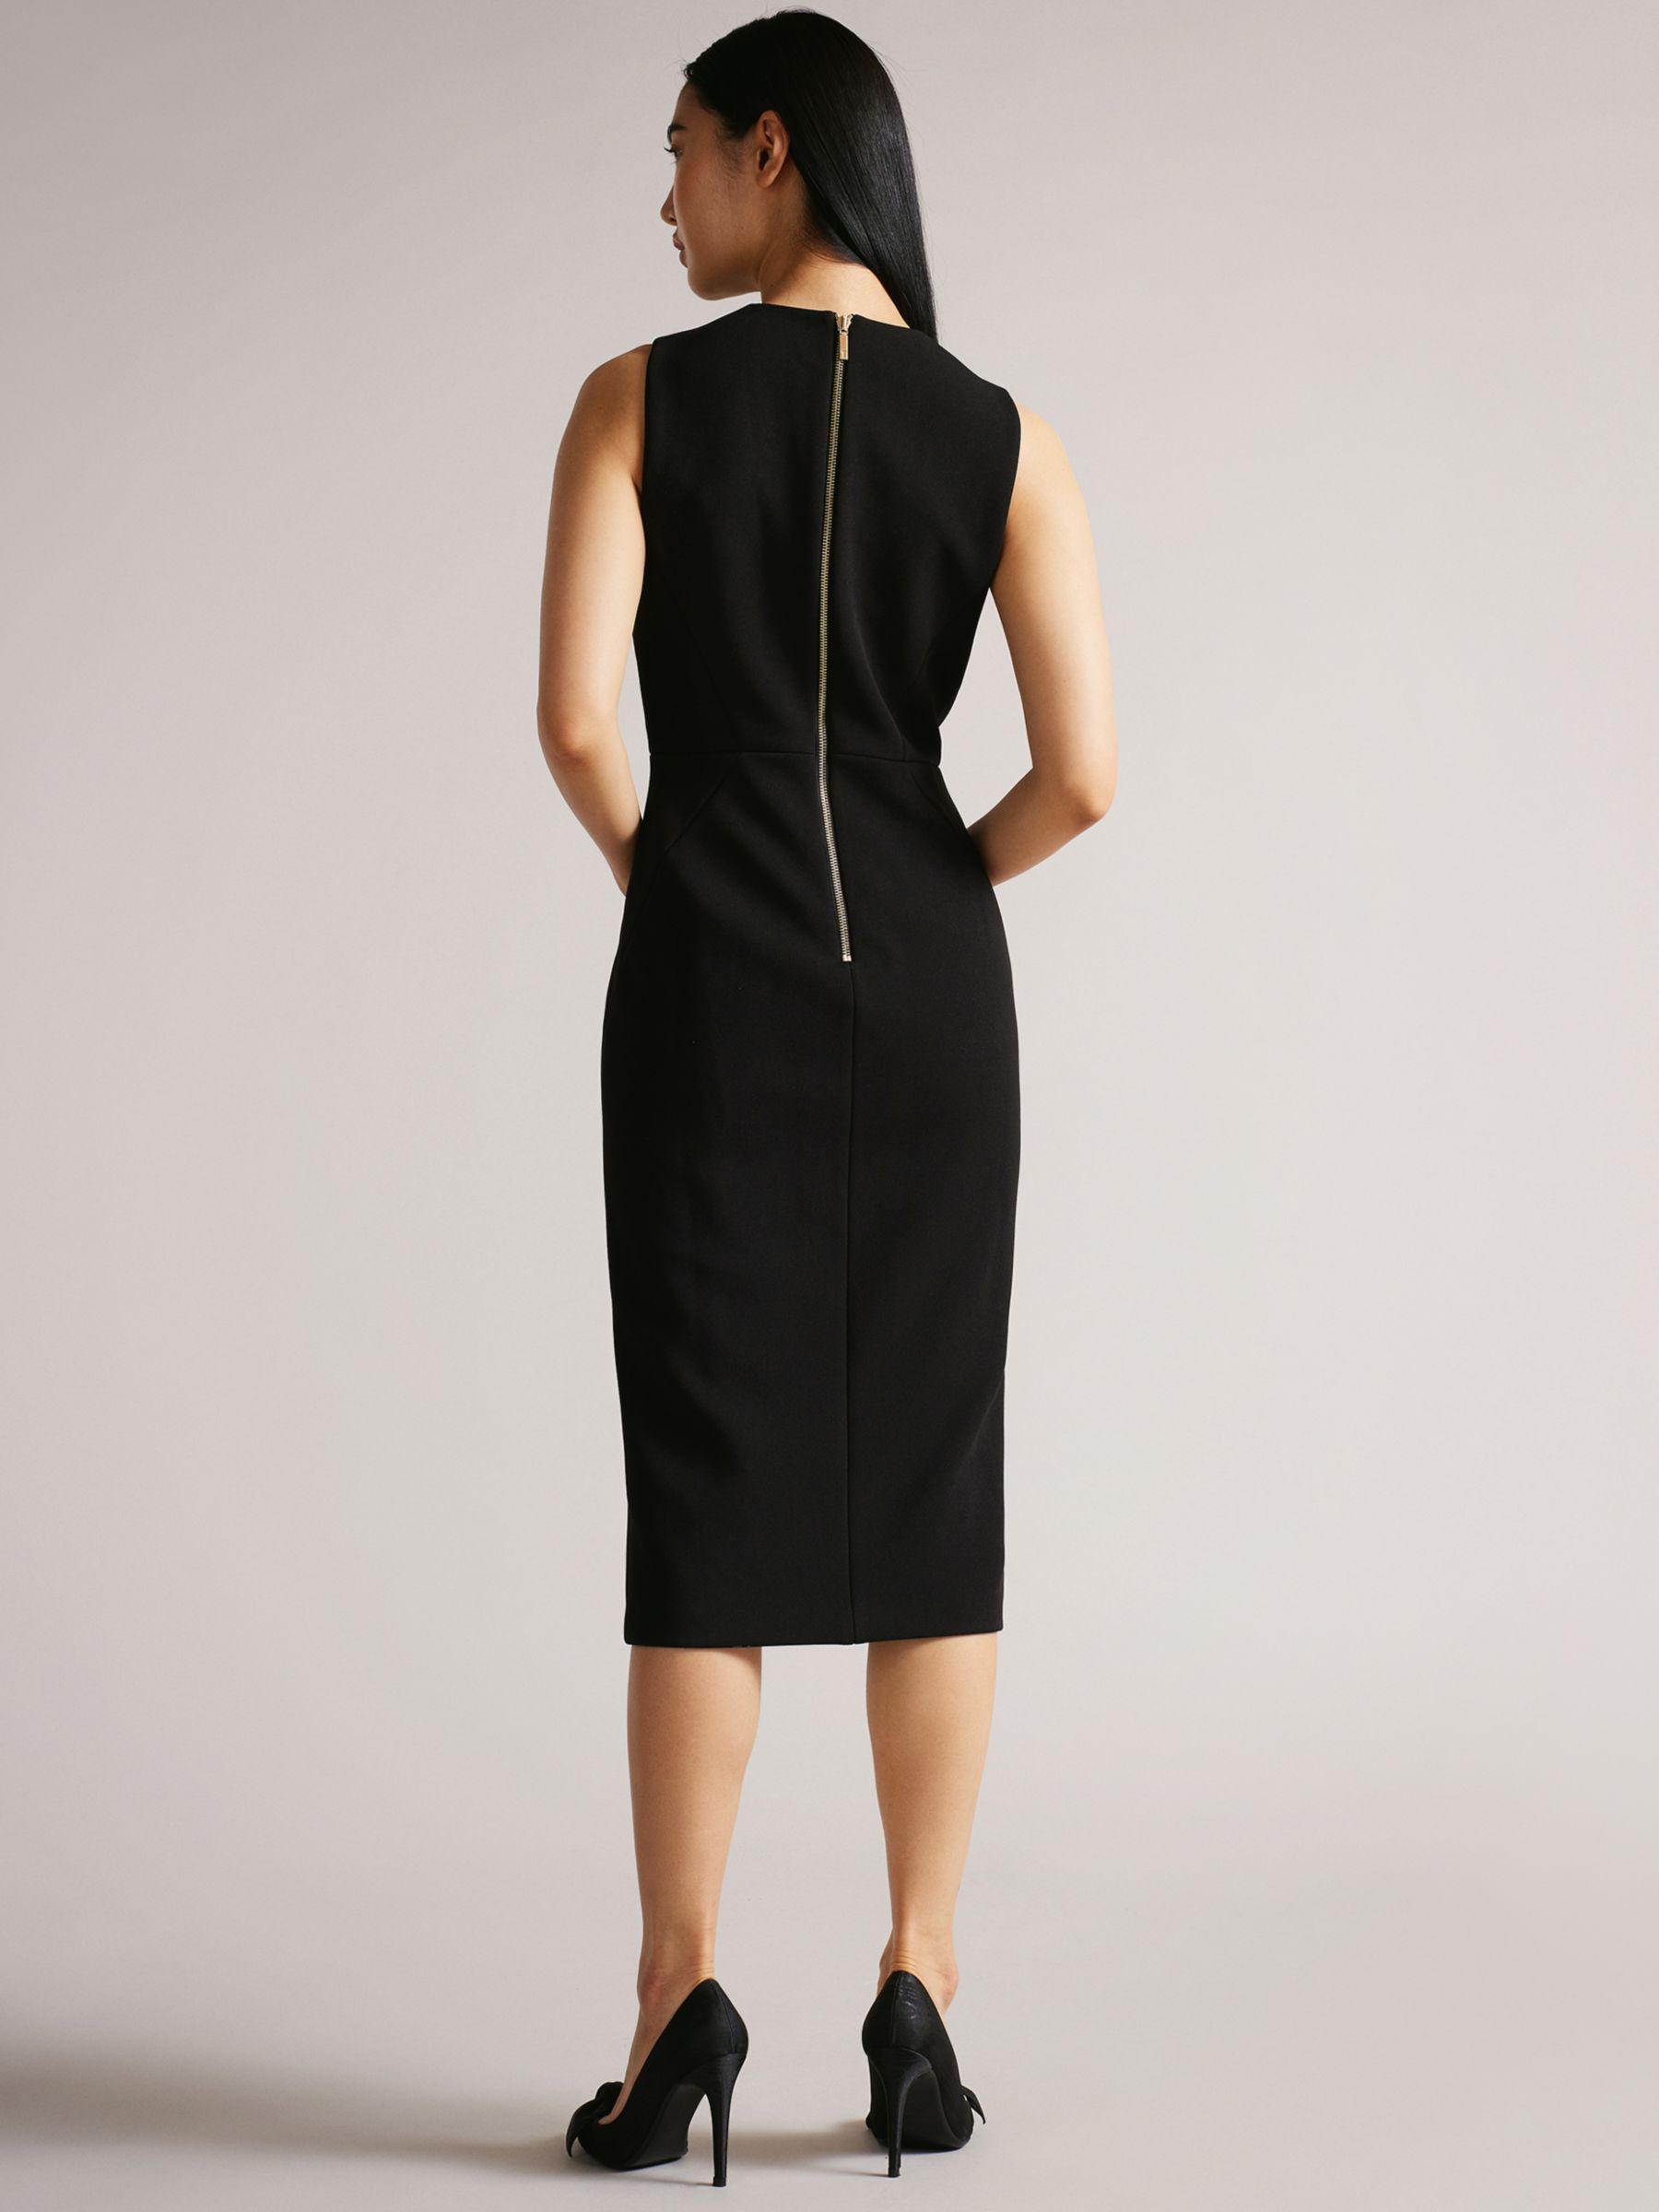 Ted Baker Seam Detail Bodycon Dress, Black at John Lewis & Partners